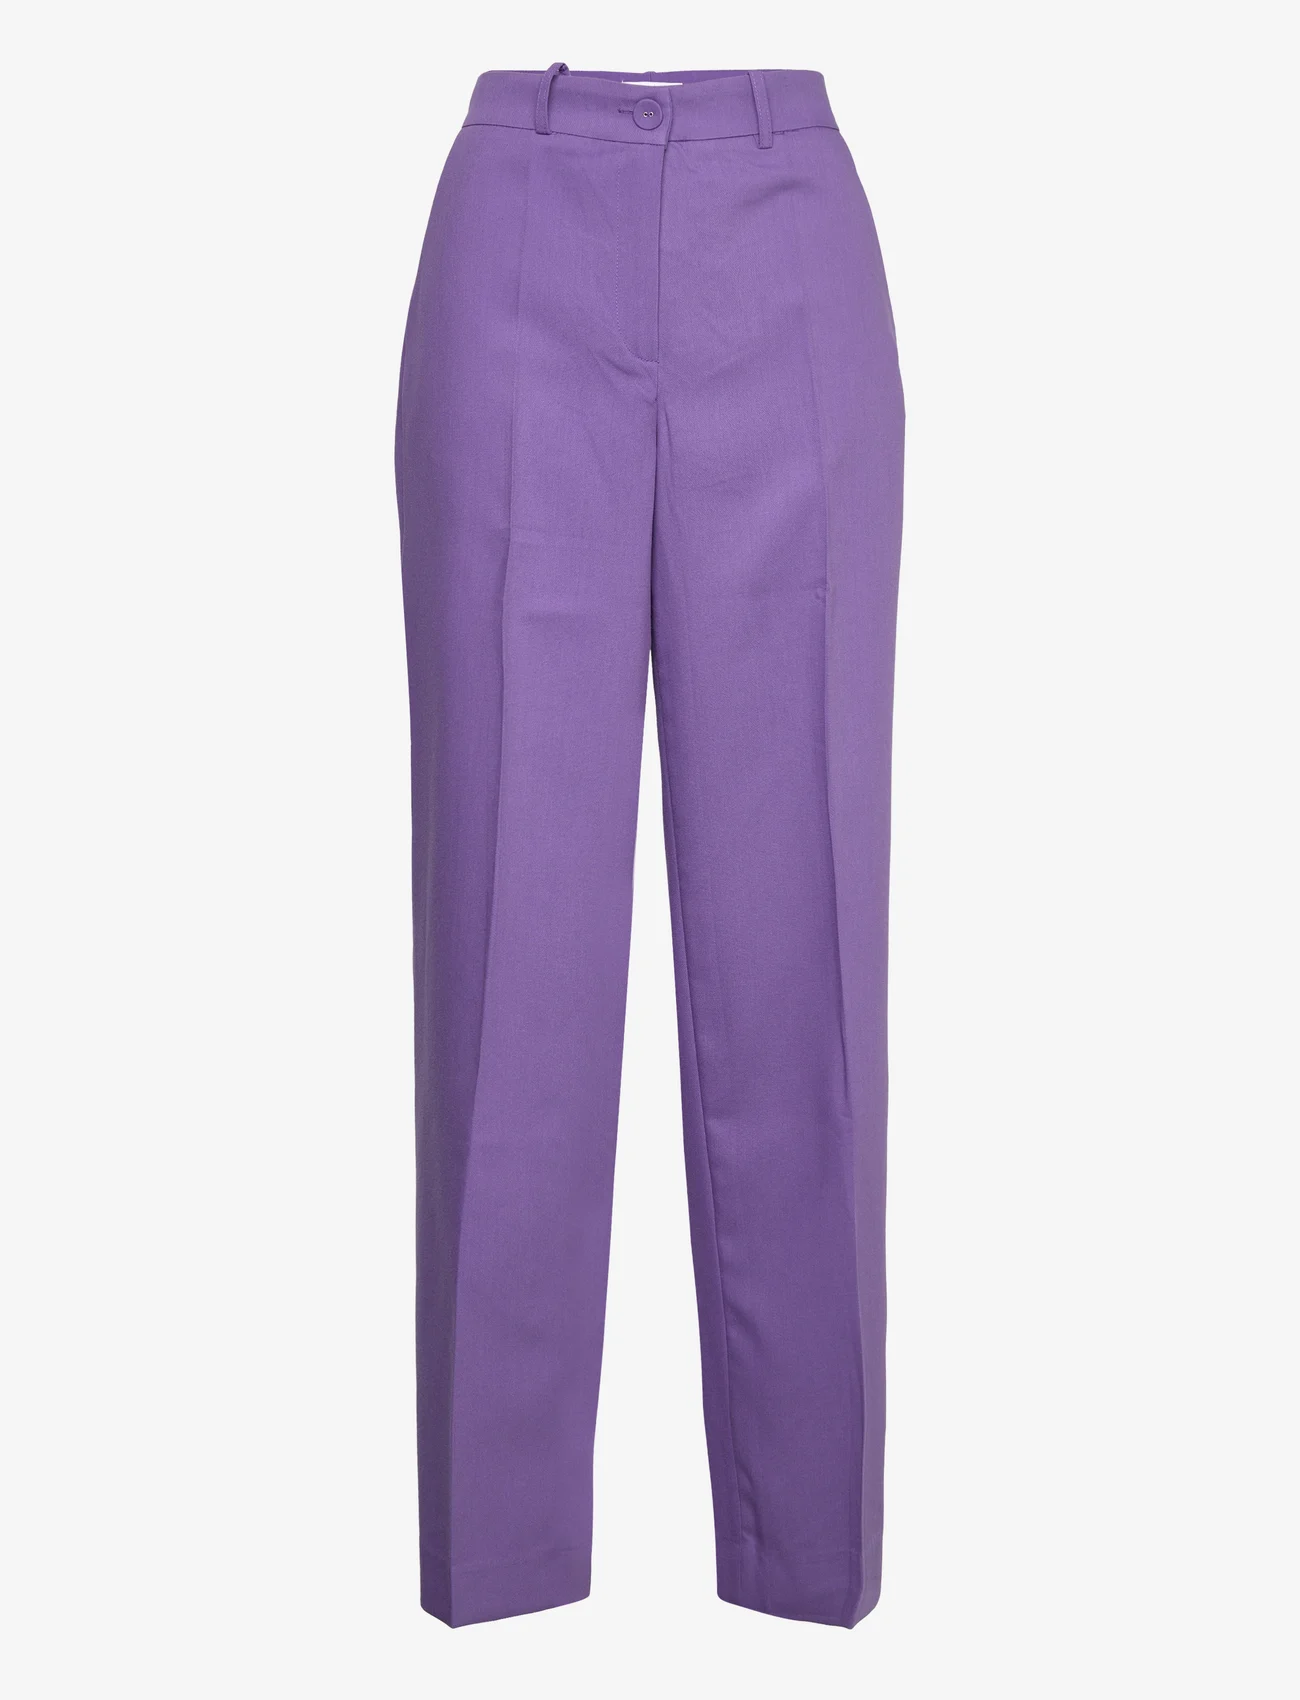 Coster Copenhagen - Pants with wide legs - Petra fit - leveälahkeiset housut - warm purple - 0